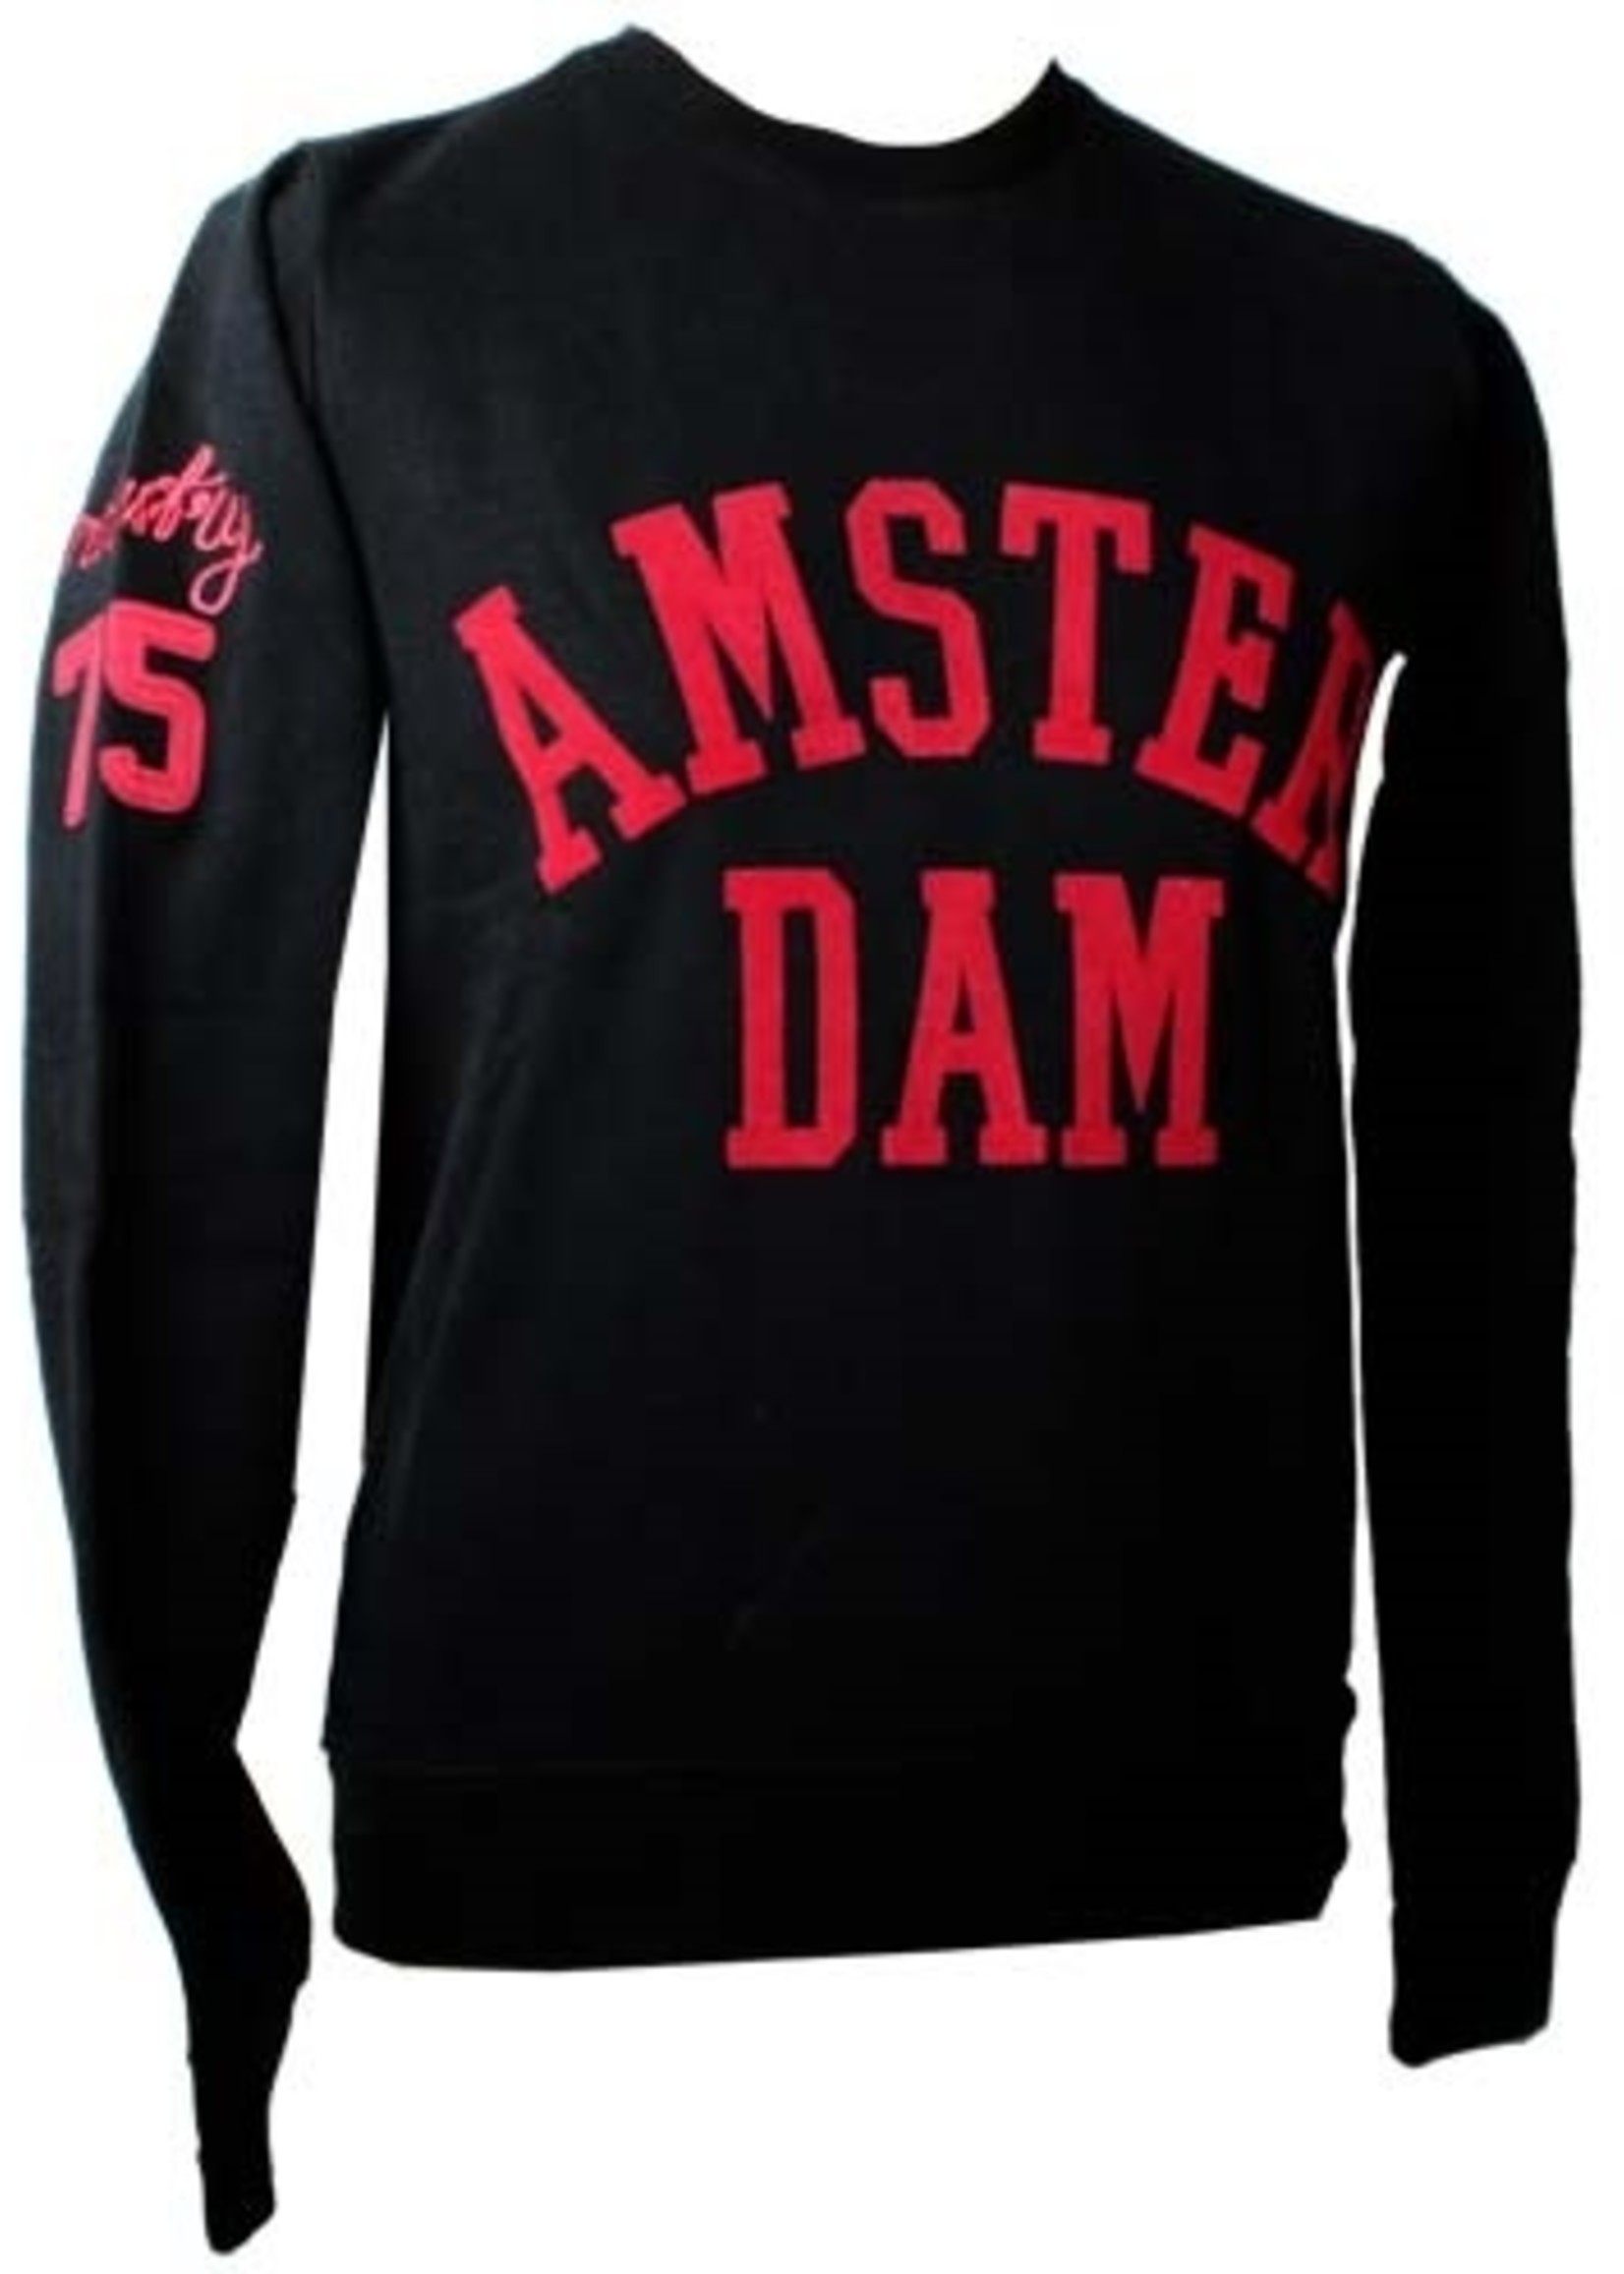 Sweater Amsterdam Zwart/Rood